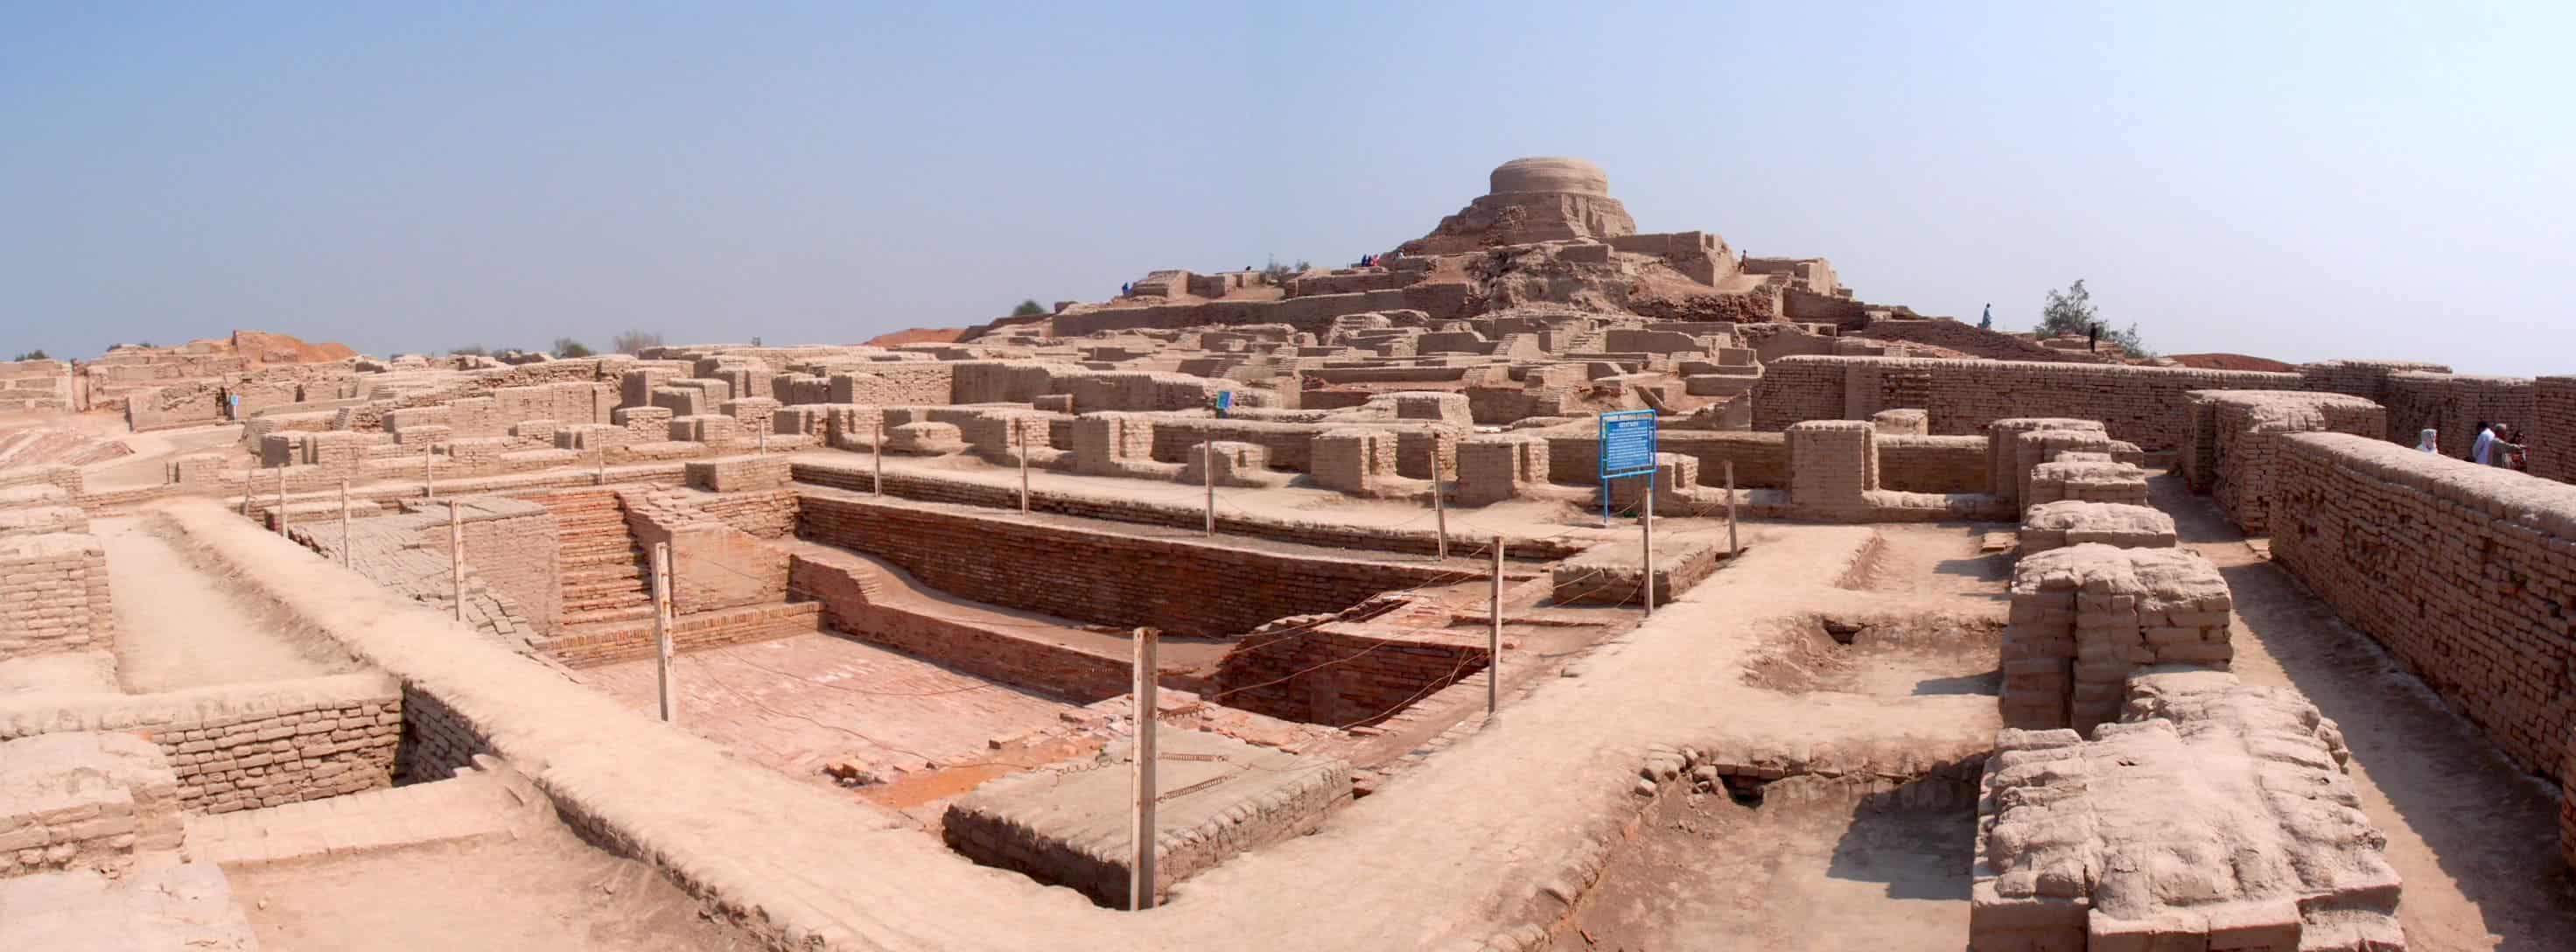 Stupa mound and Great Bath in Mohenjo daro.